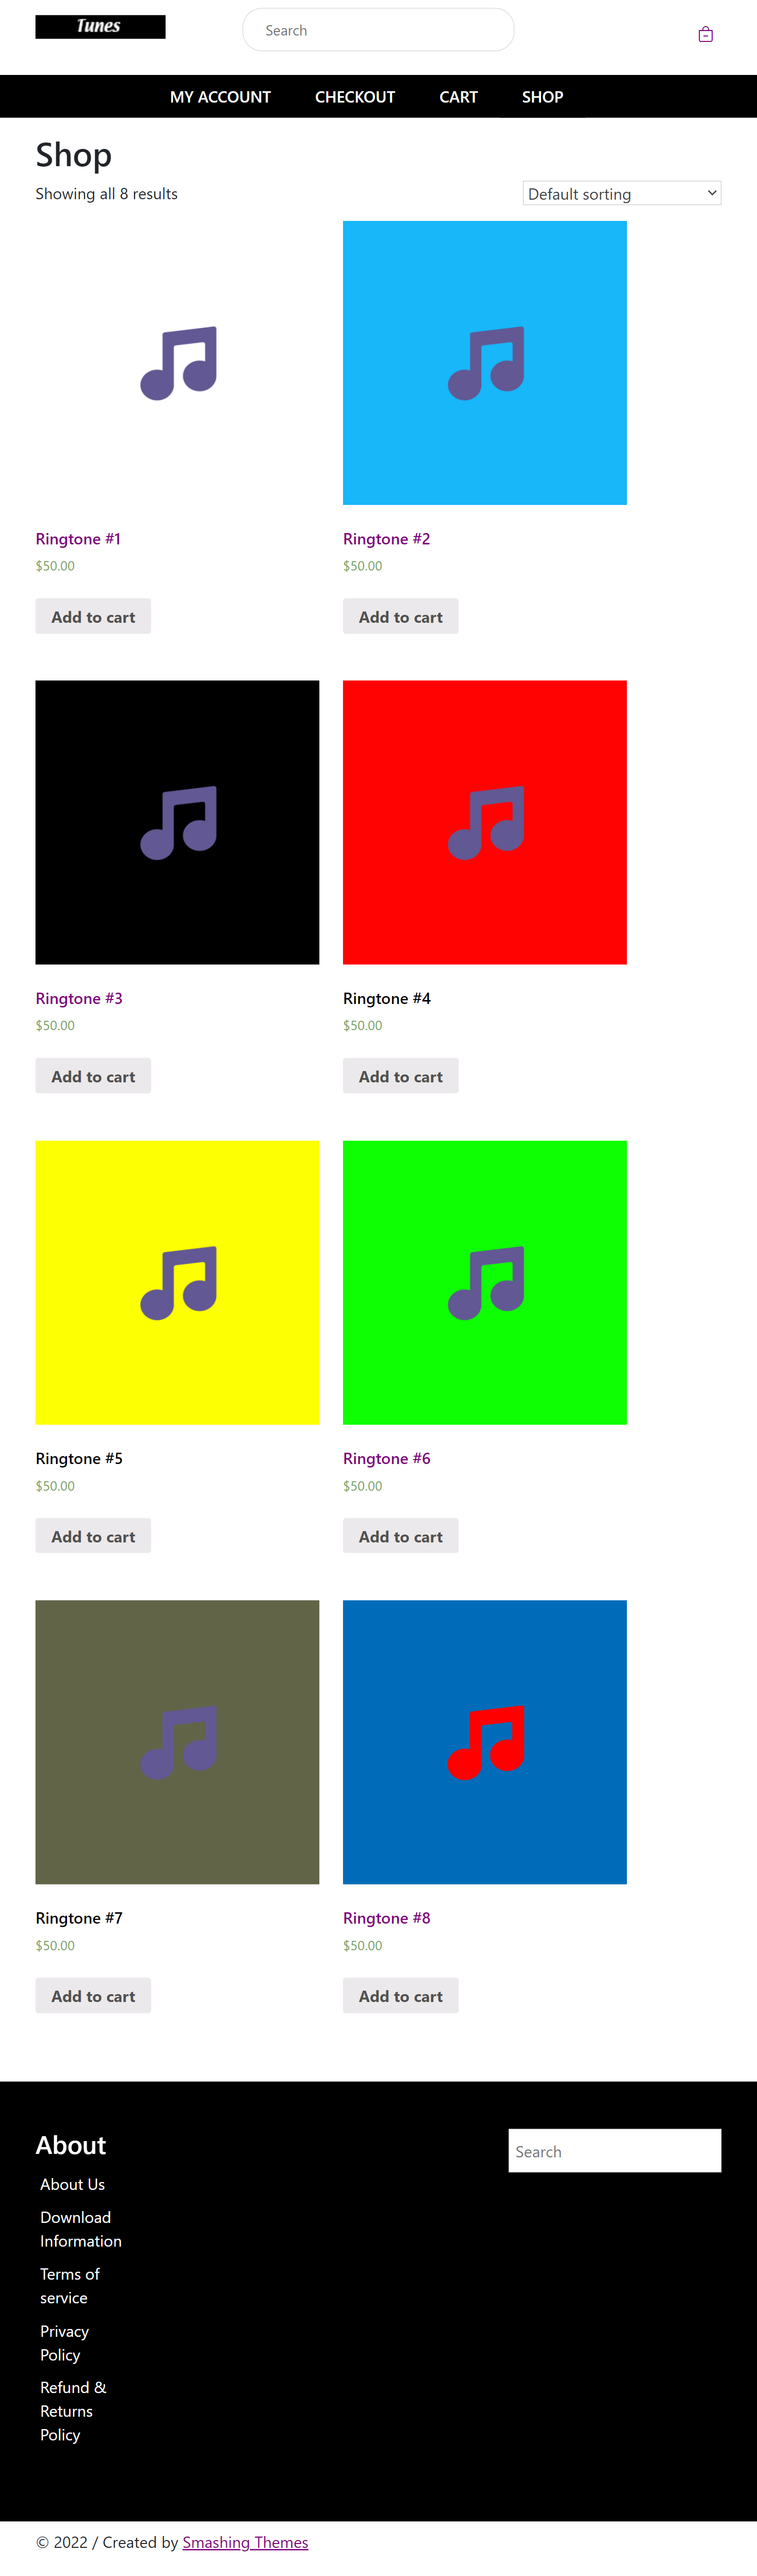 Tunes WordPress Theme for Audio Files- Shop Page Screenshot for iPad Mini (768px_1024px)